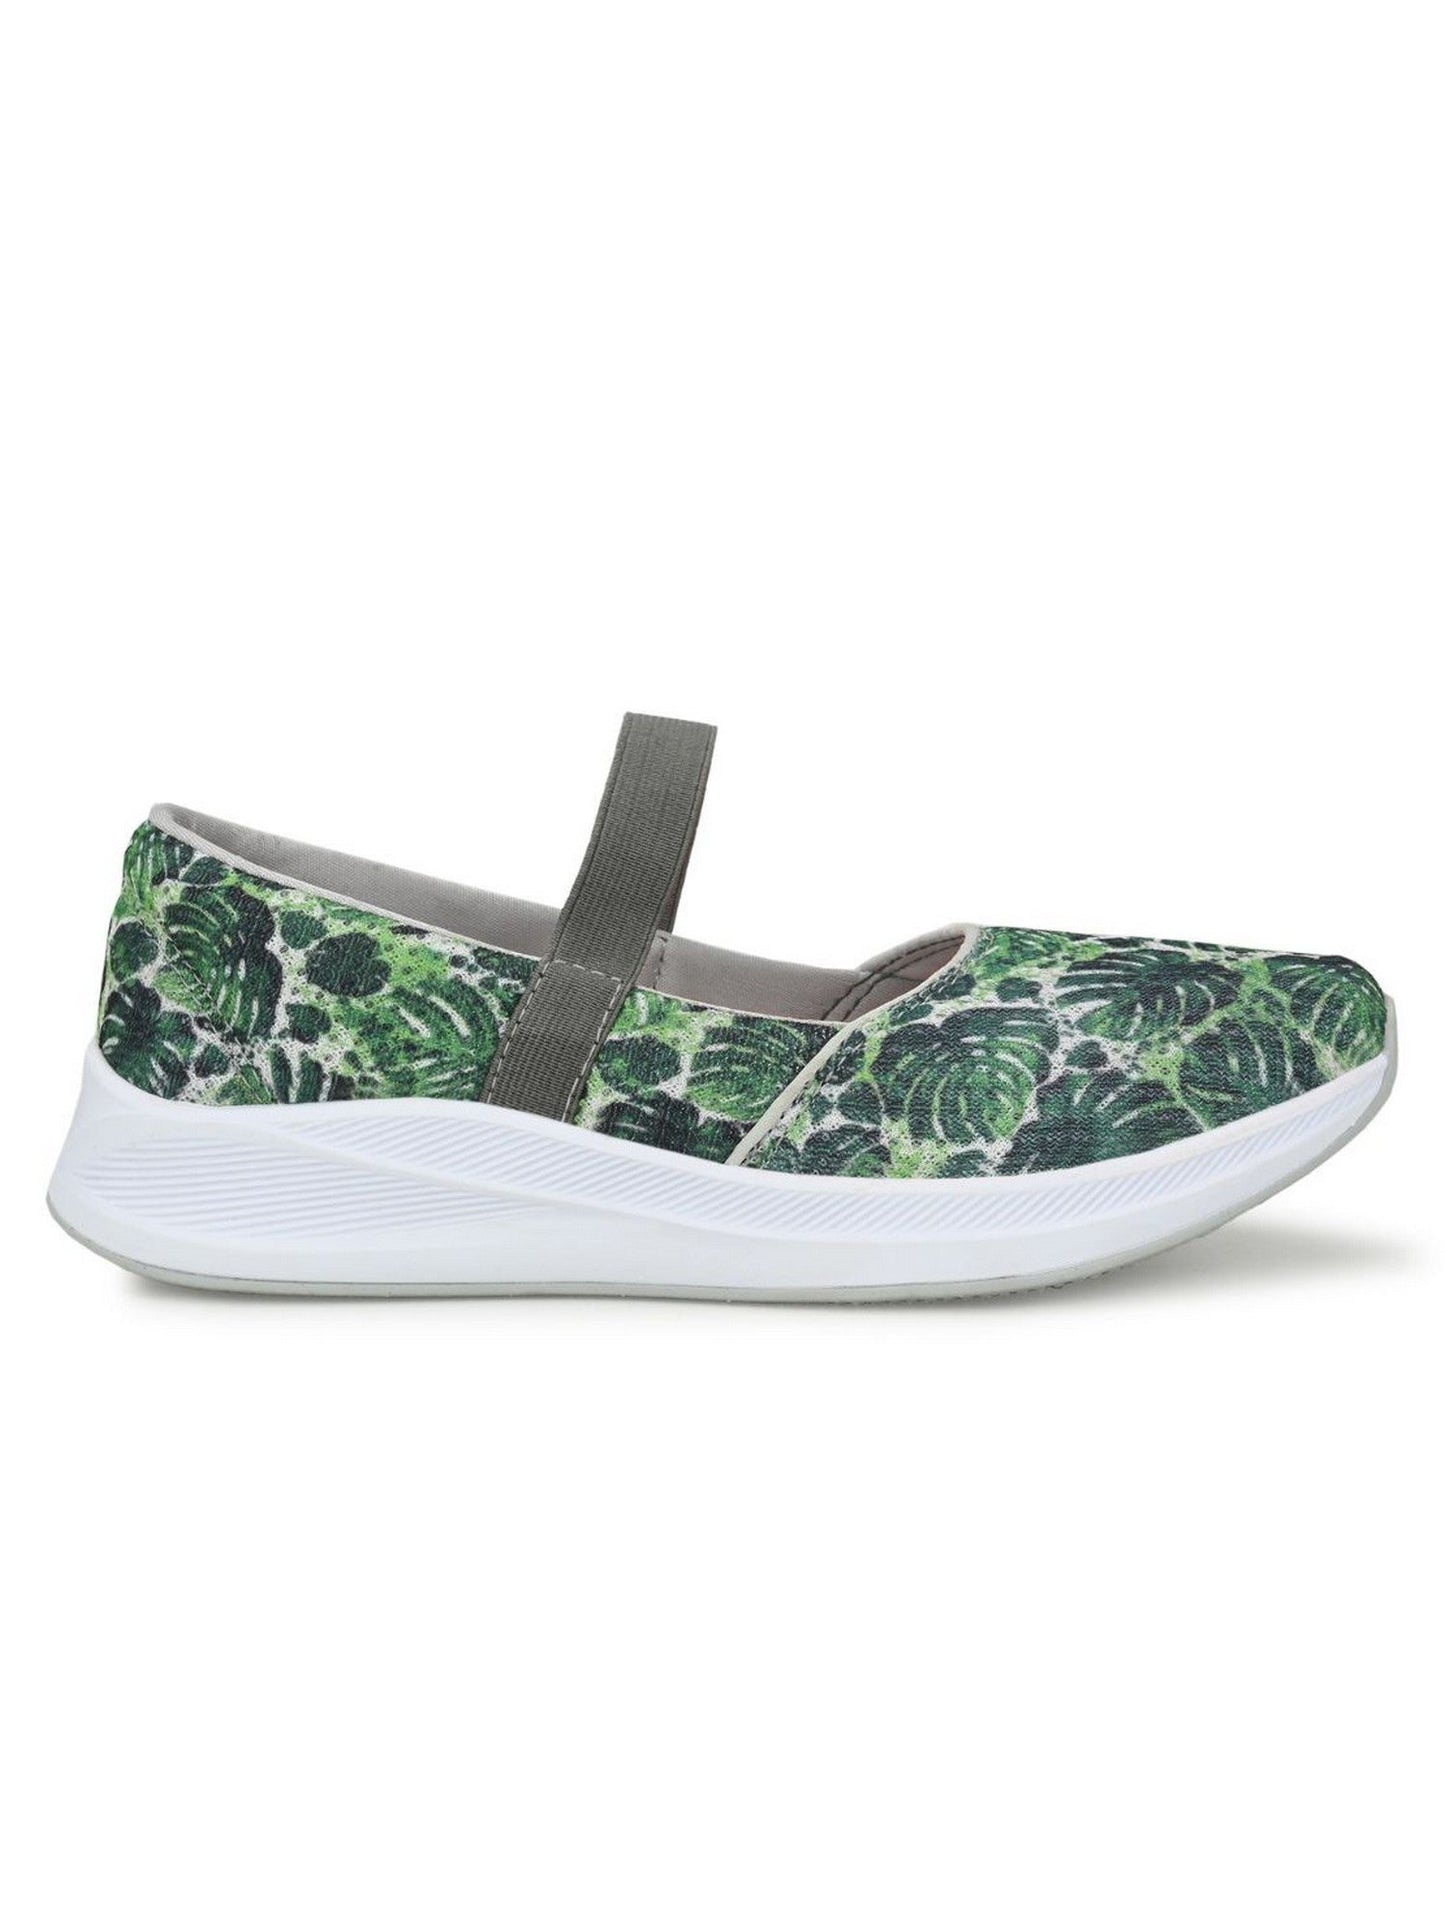 Hirolas® Women Printed Green Mesh Fitness Slip-On Walking Sports_Shoes (HRLWF12GRN)